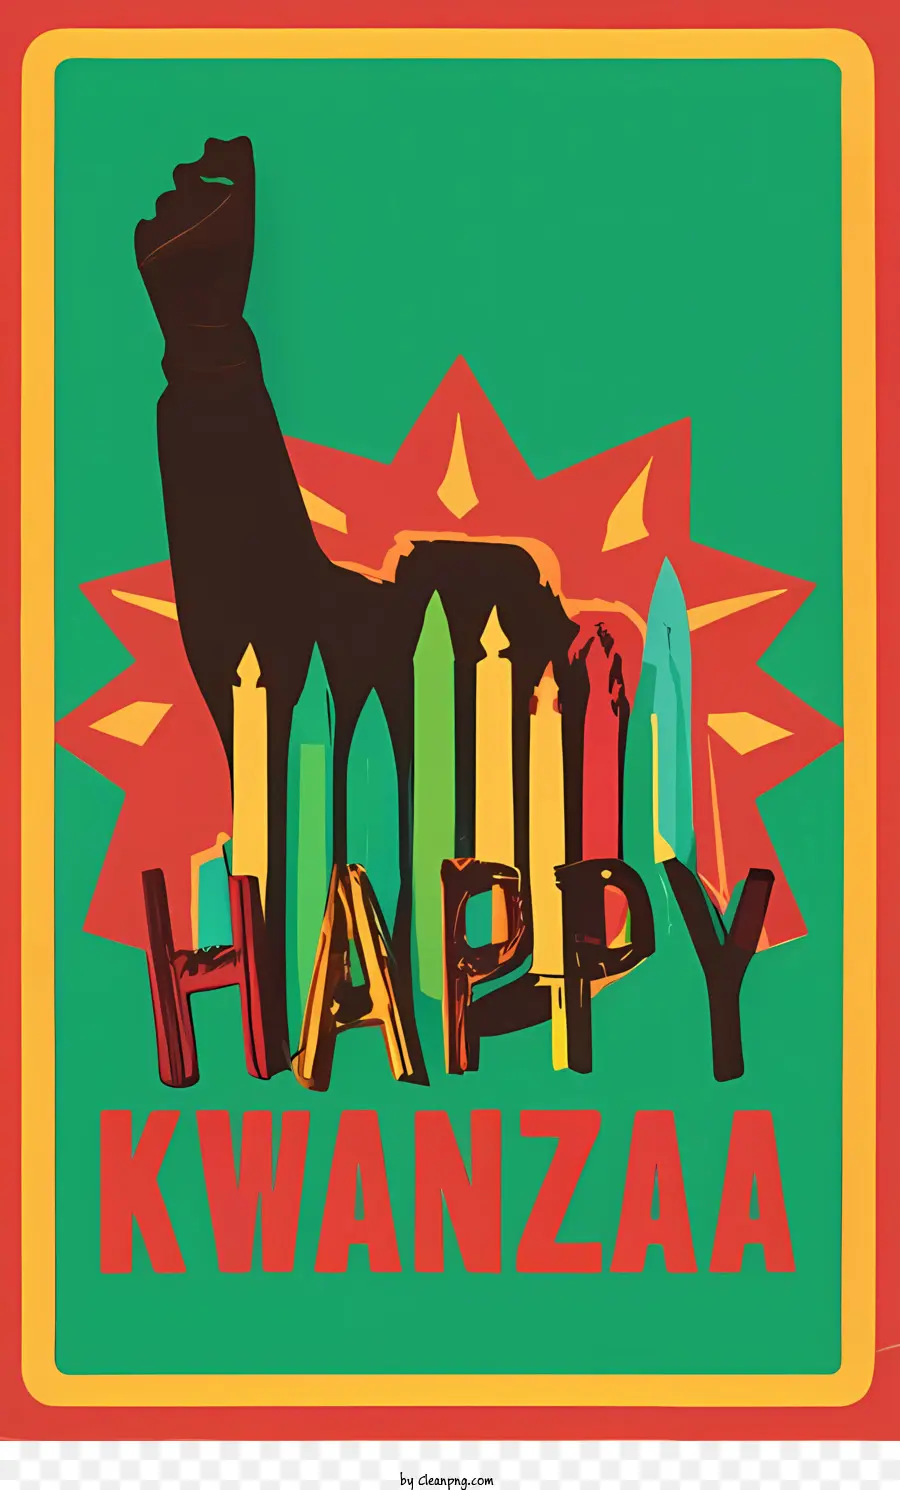 Happy Kwanzaa Happy Kwanzaa African American Culture Celebration Diversity - 